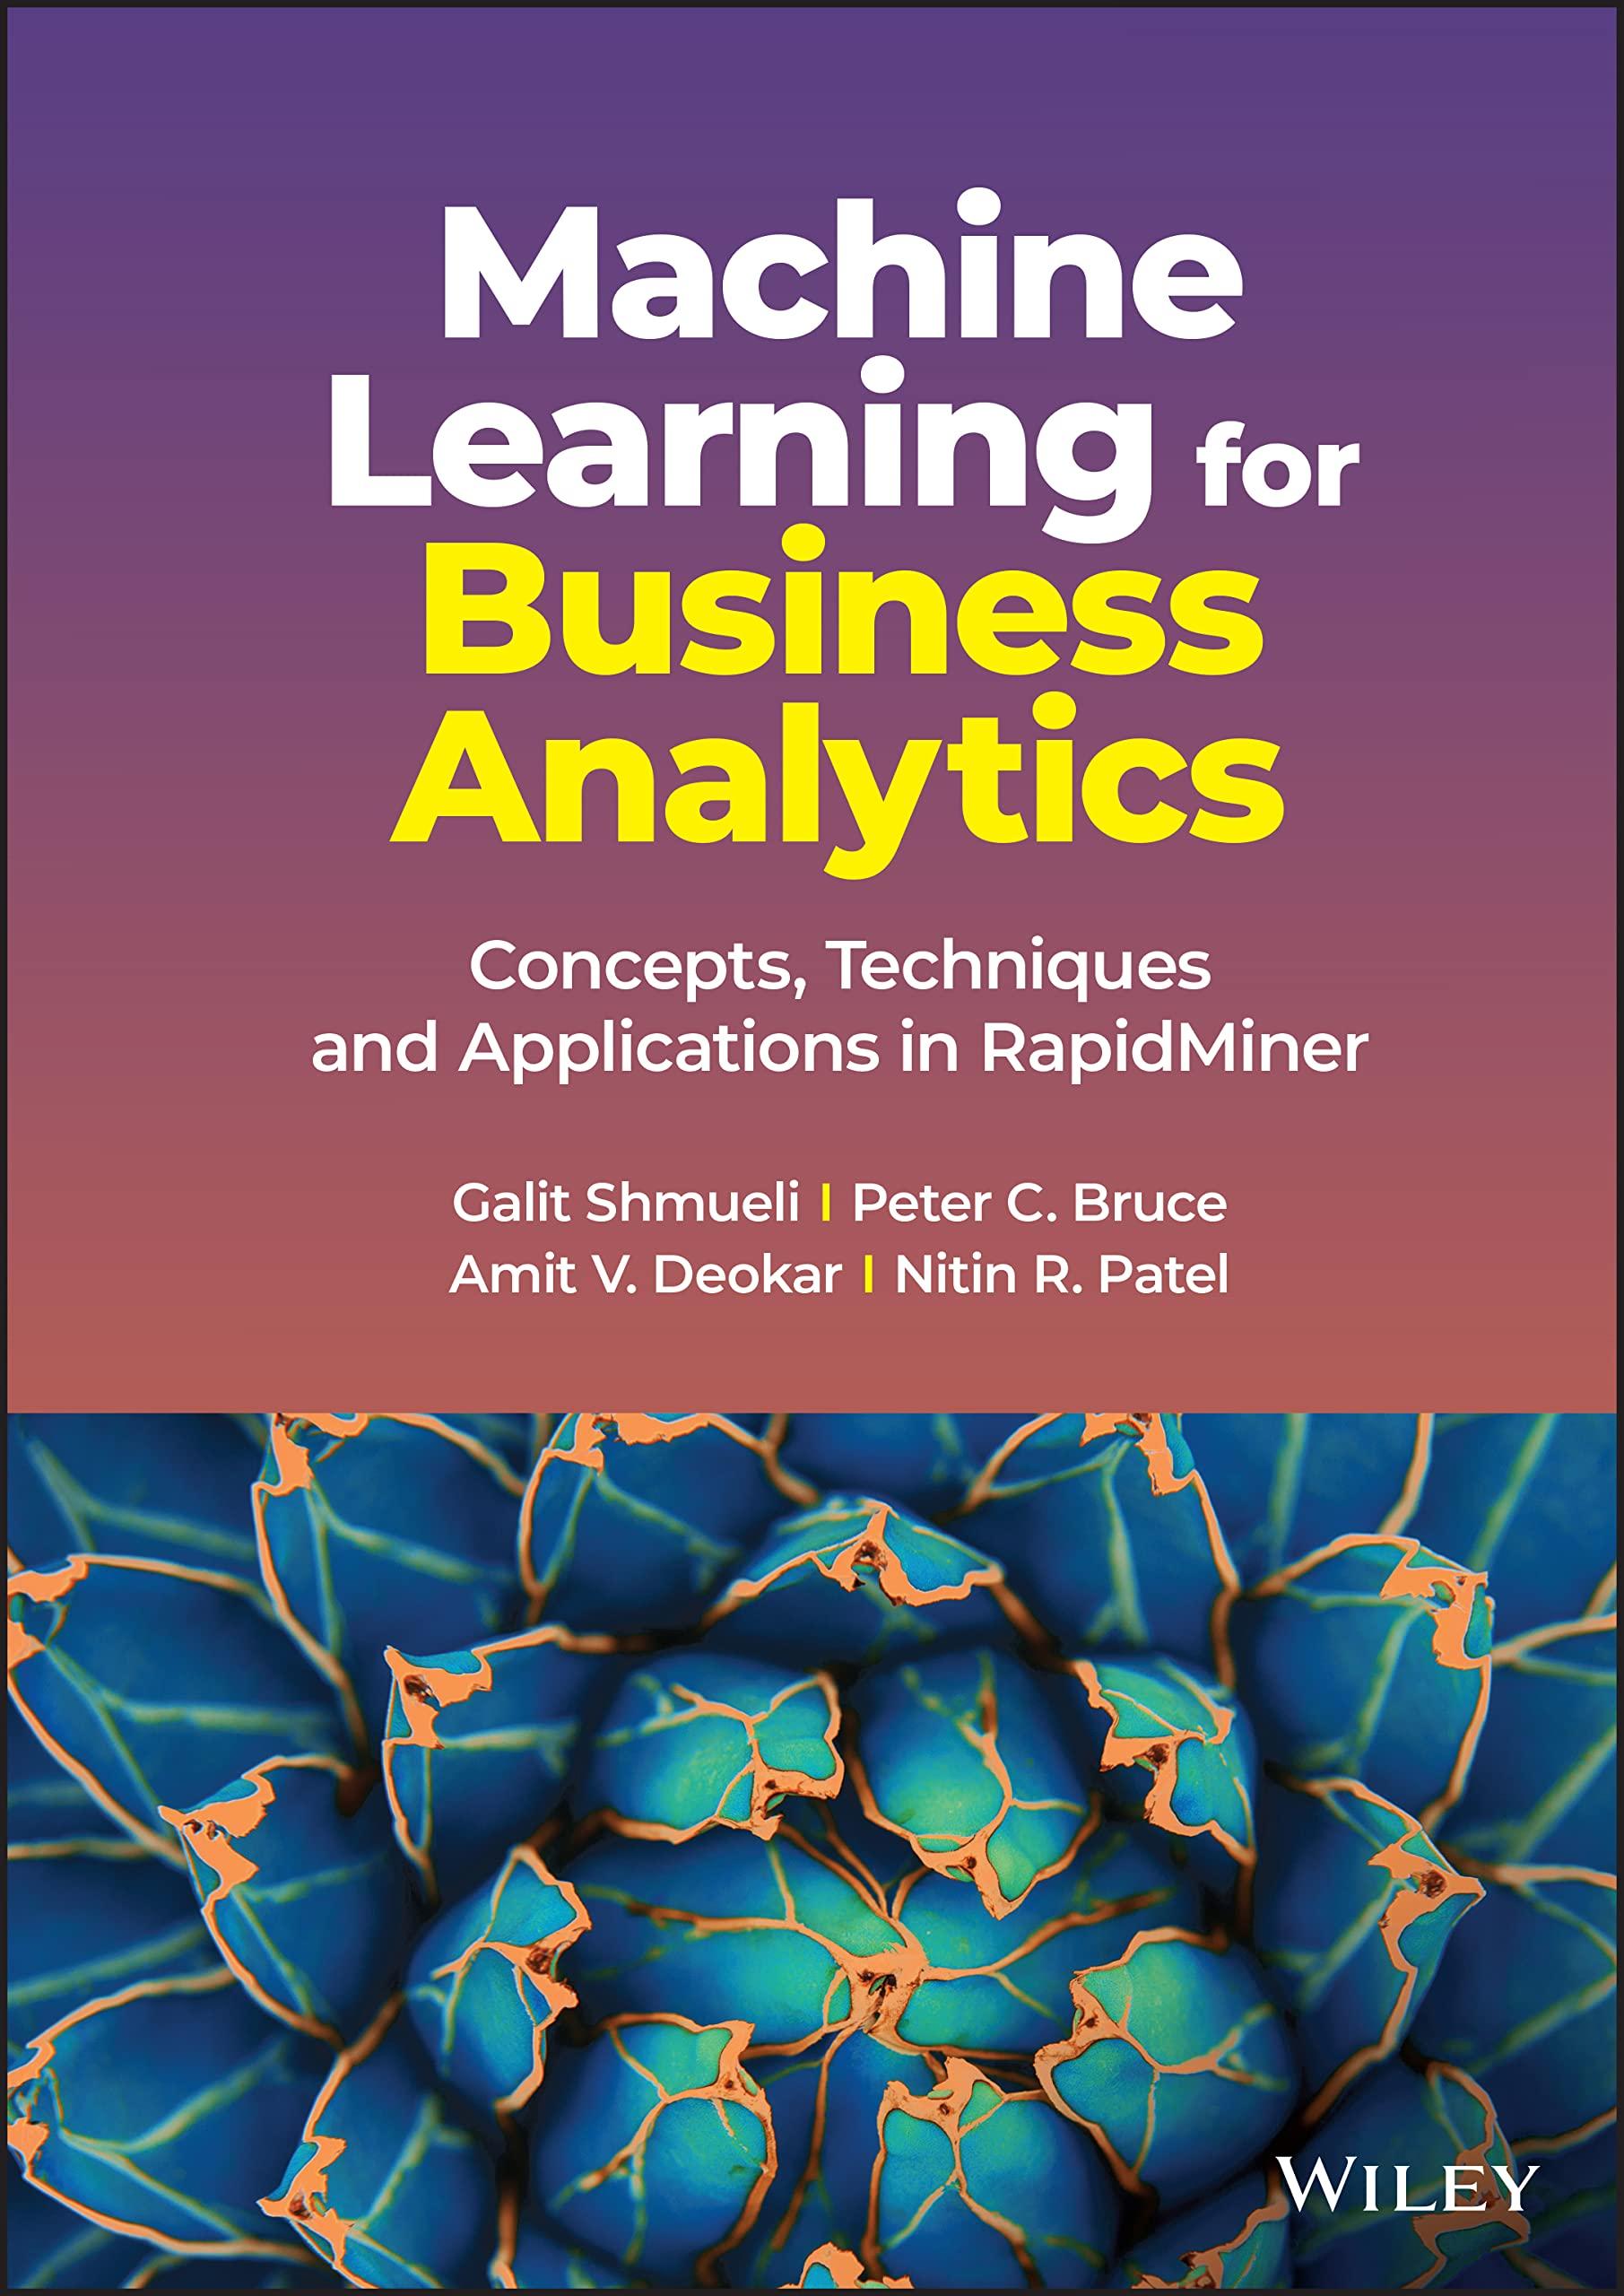 machine learning for business analytics 1st edition galit shmueli, peter c. bruce, amit v. deokar, nitin r.